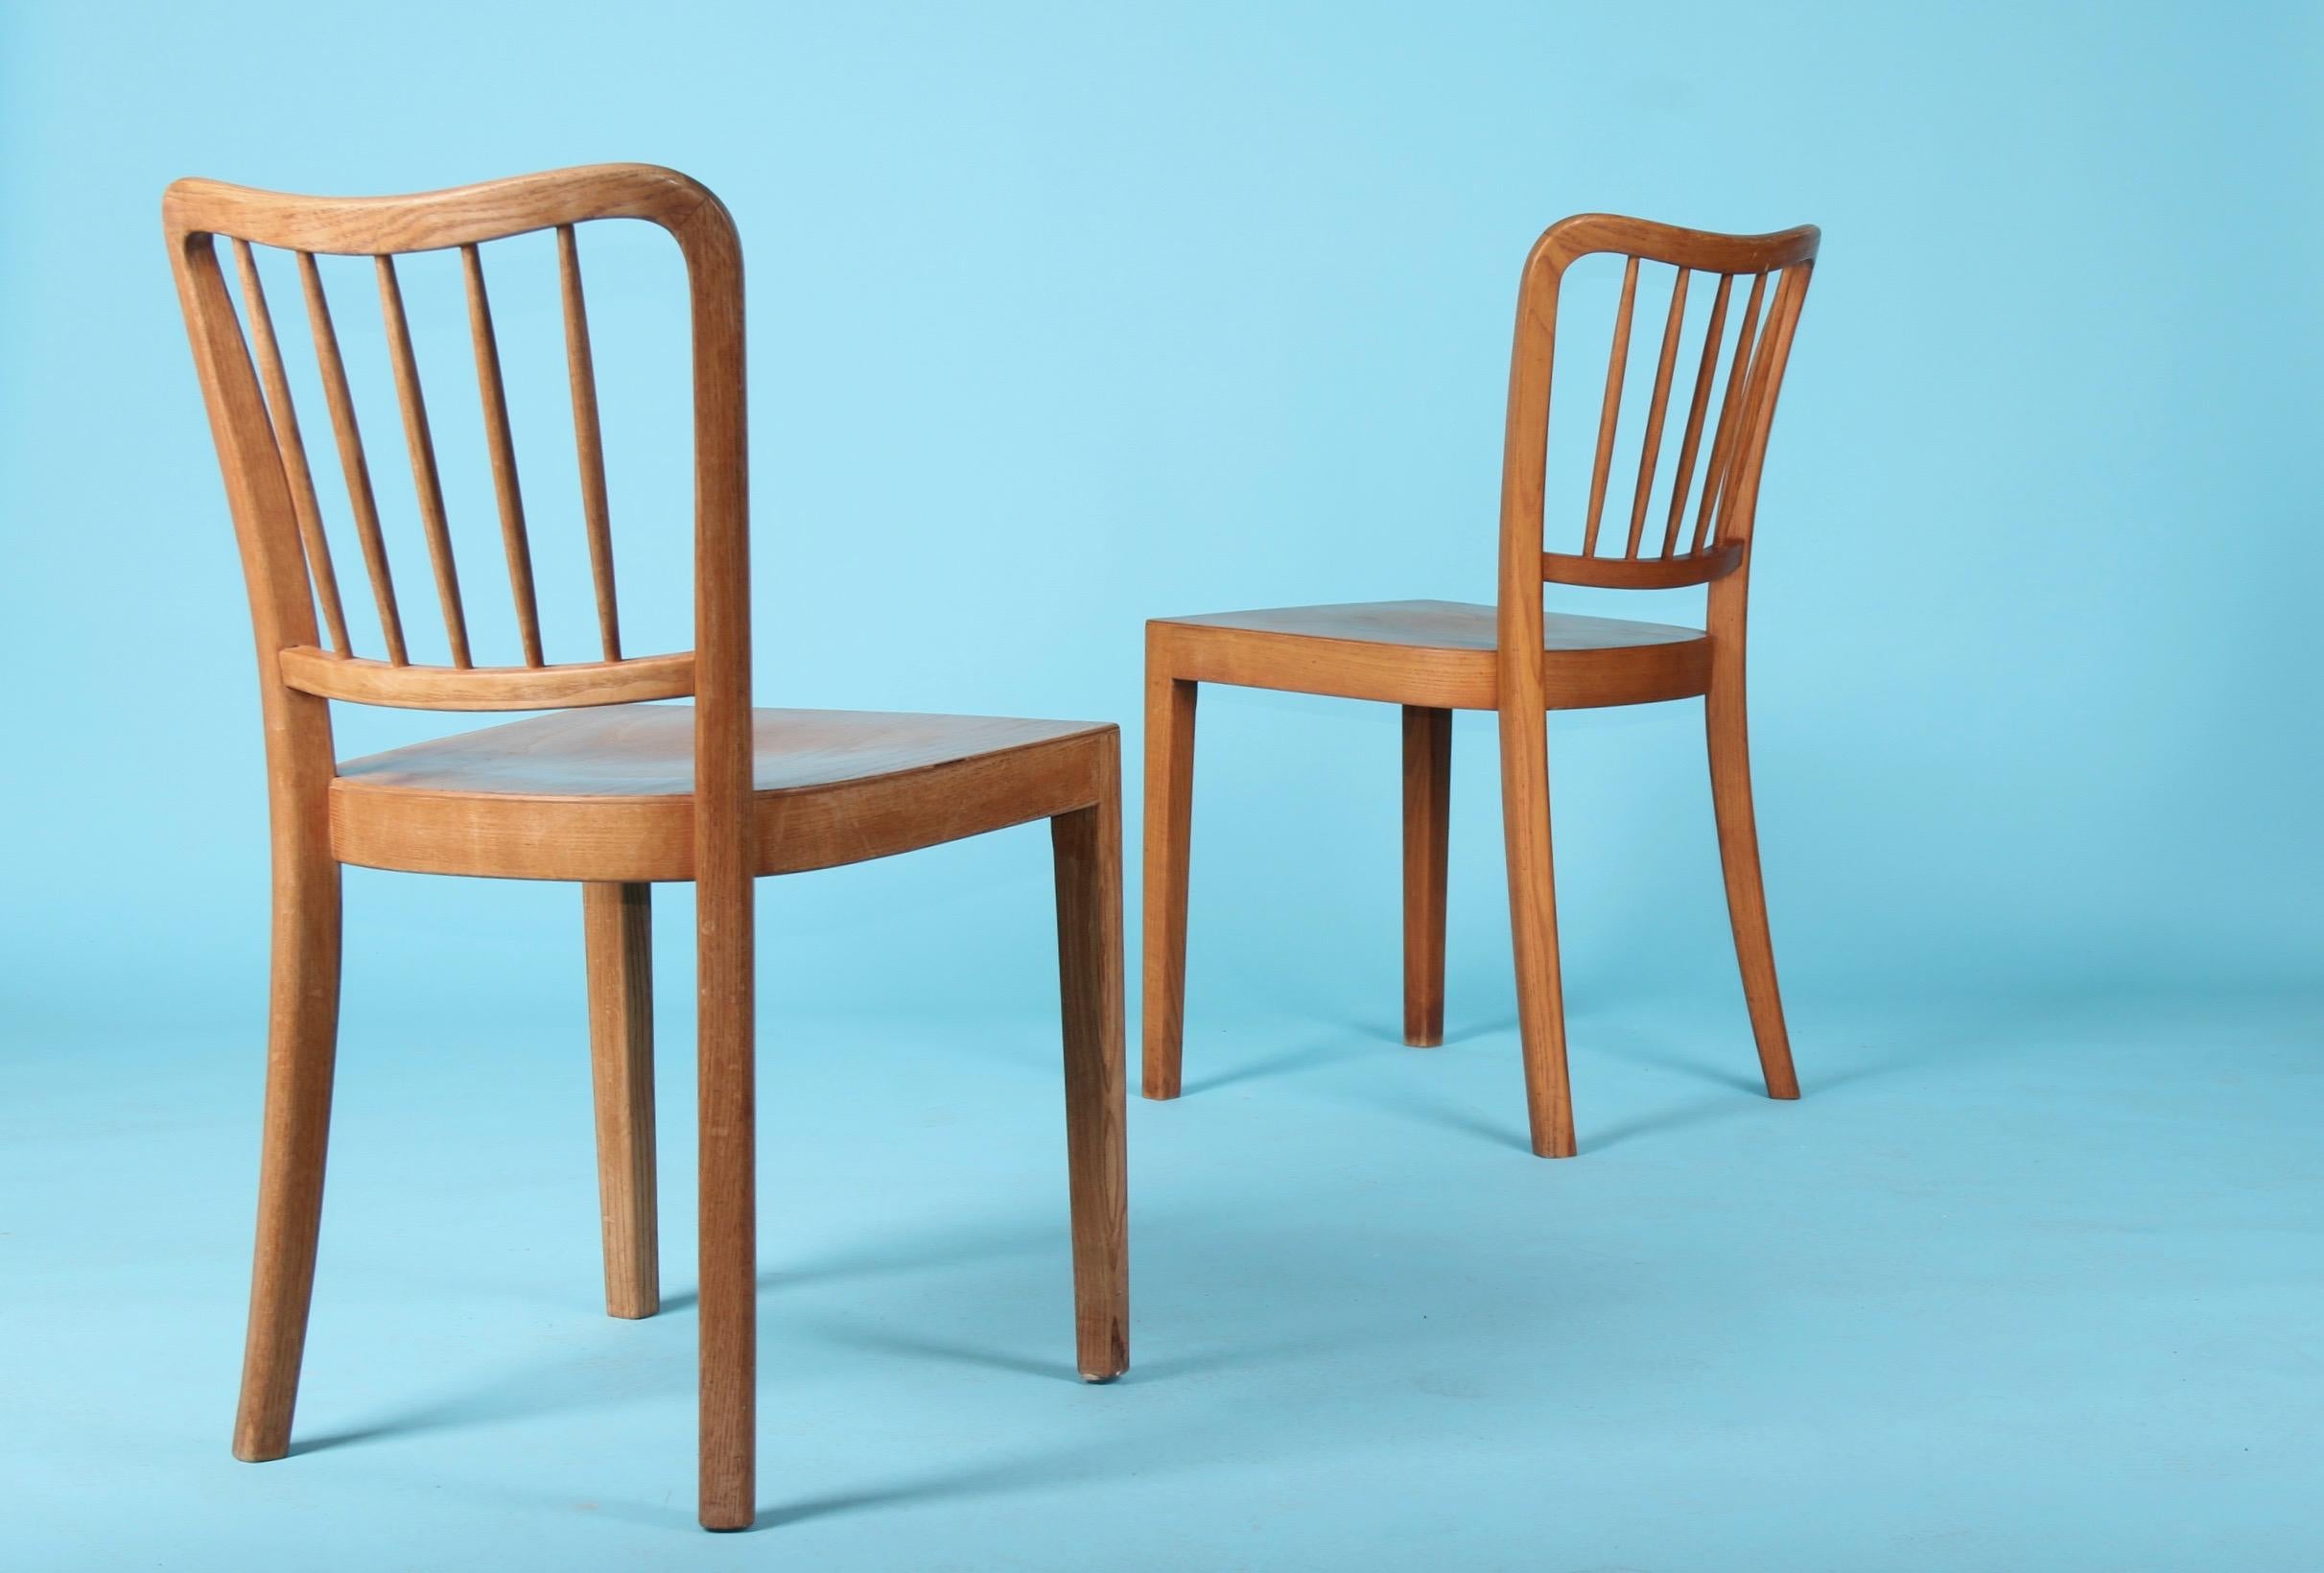 Pair of Organic Wood Chairs 1